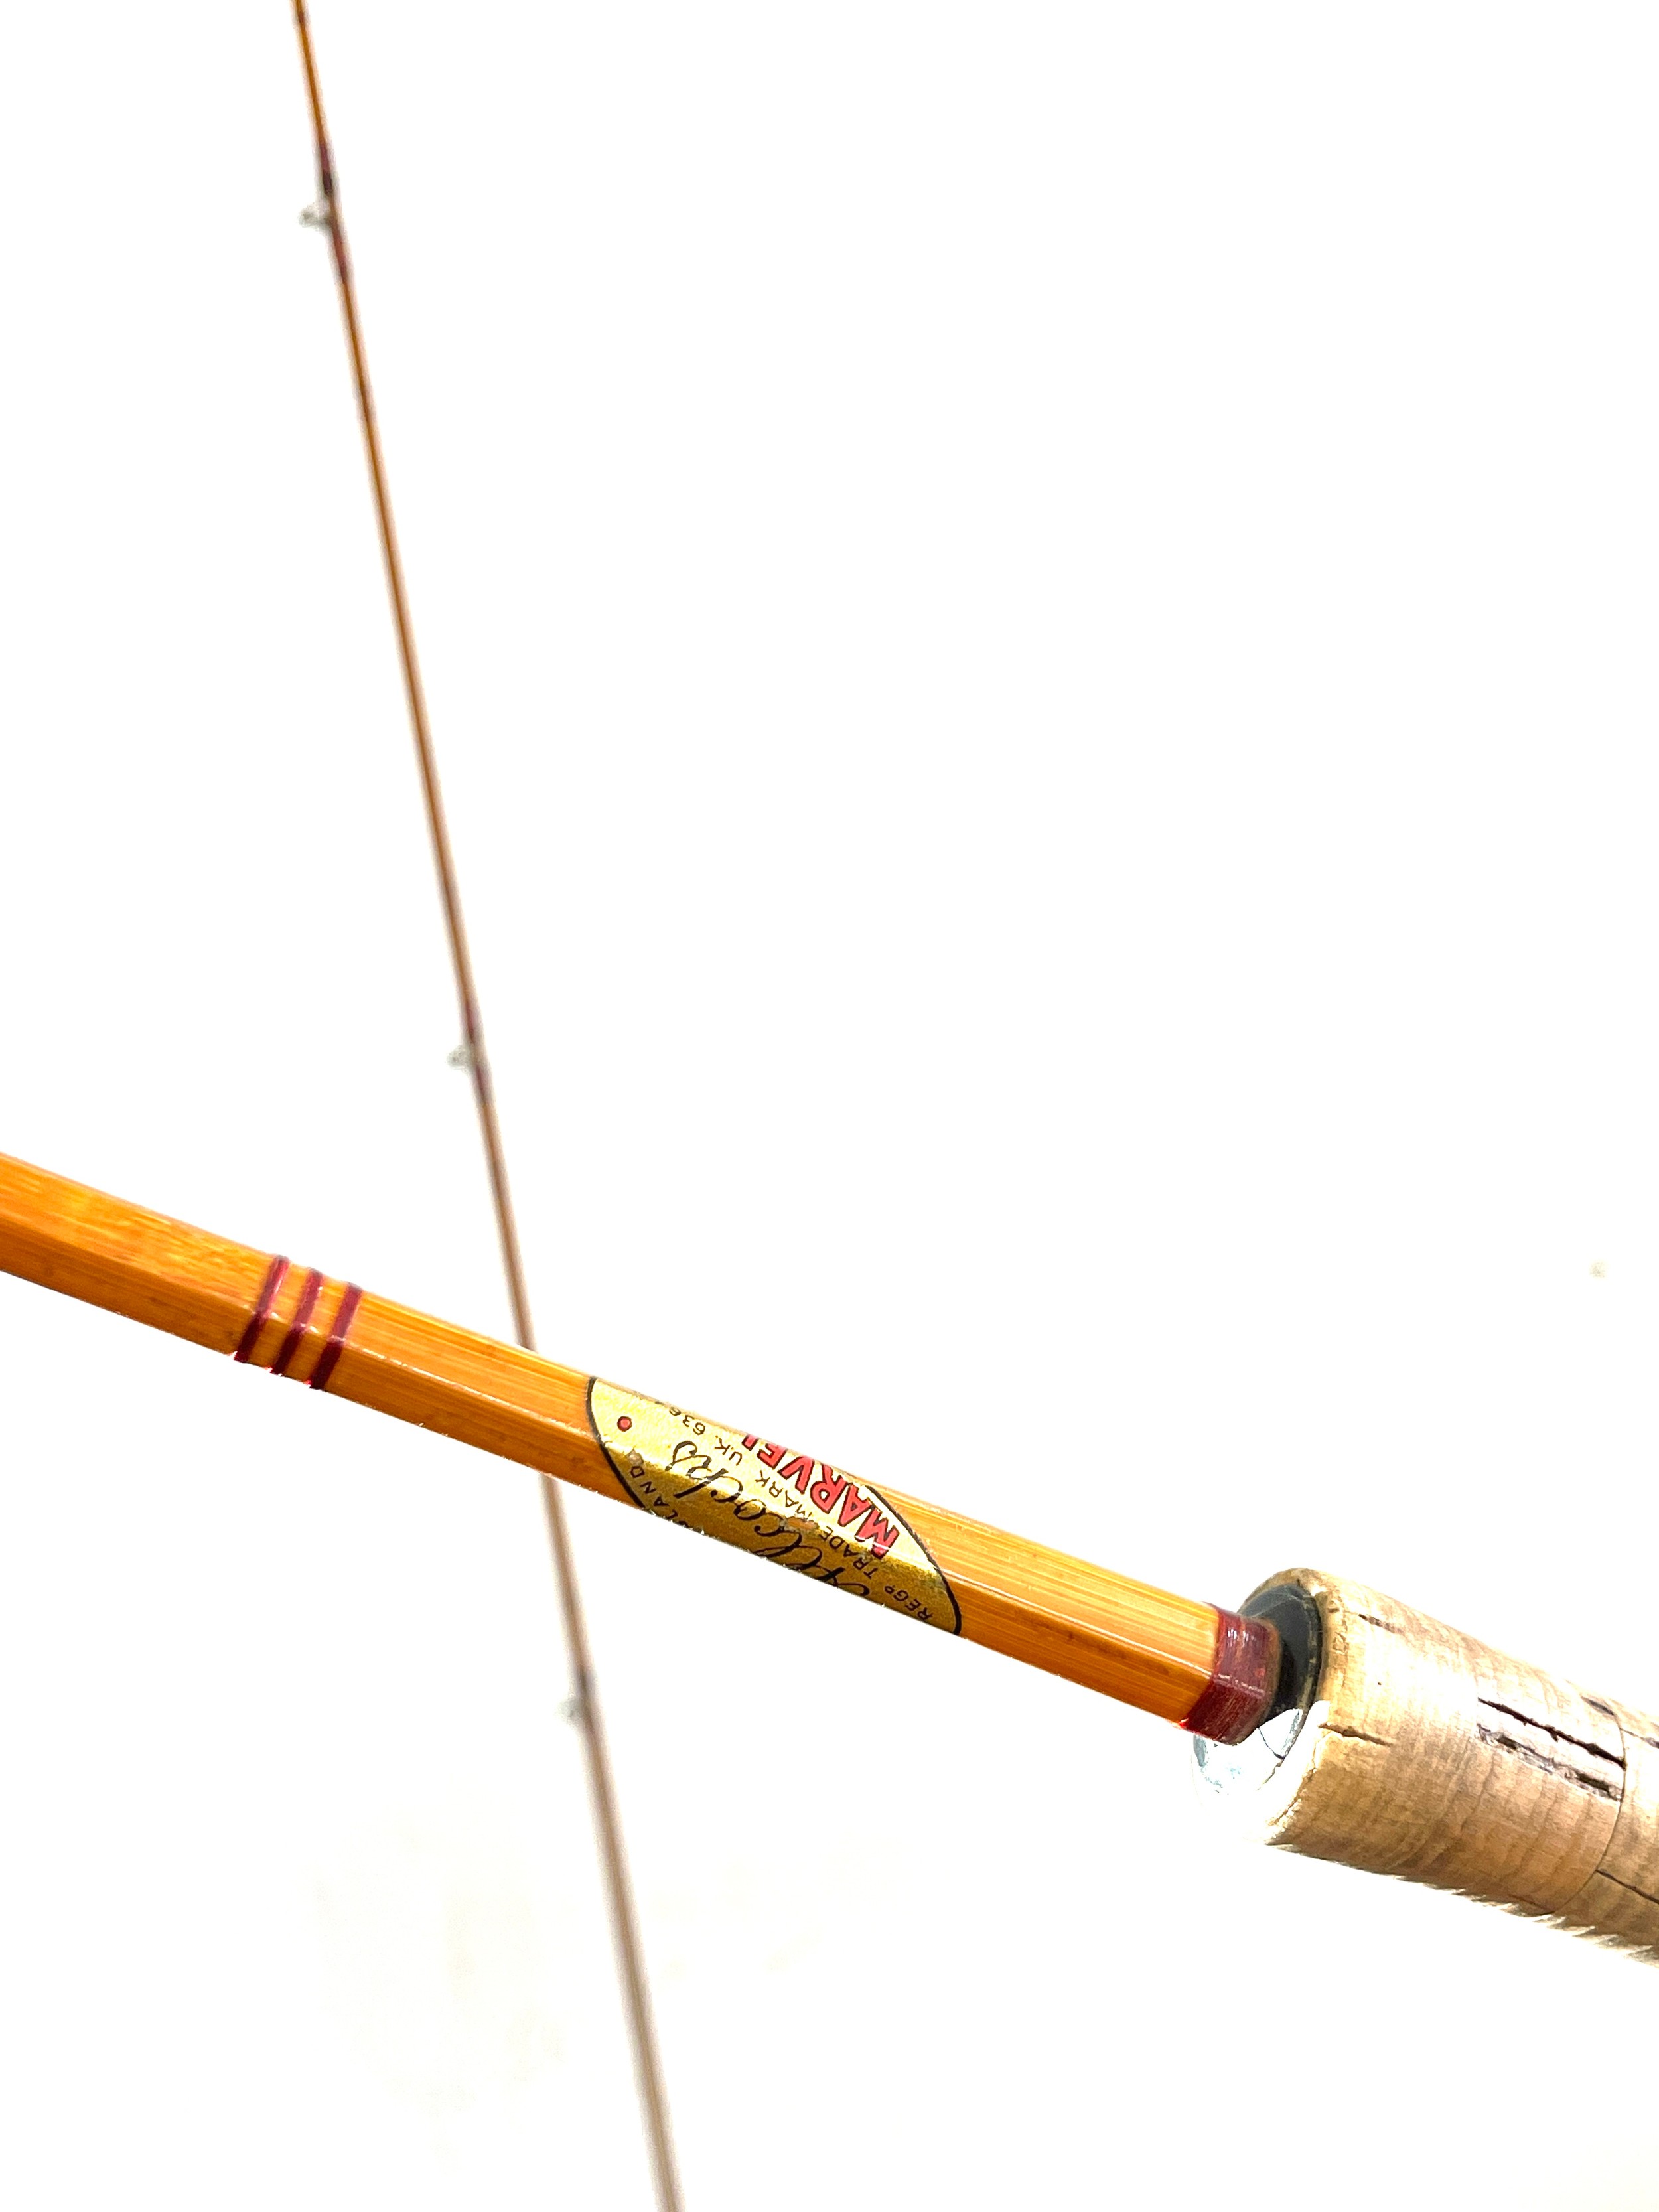 Allcock's vintage Marvel split cane fishing rod, with case - Image 2 of 8